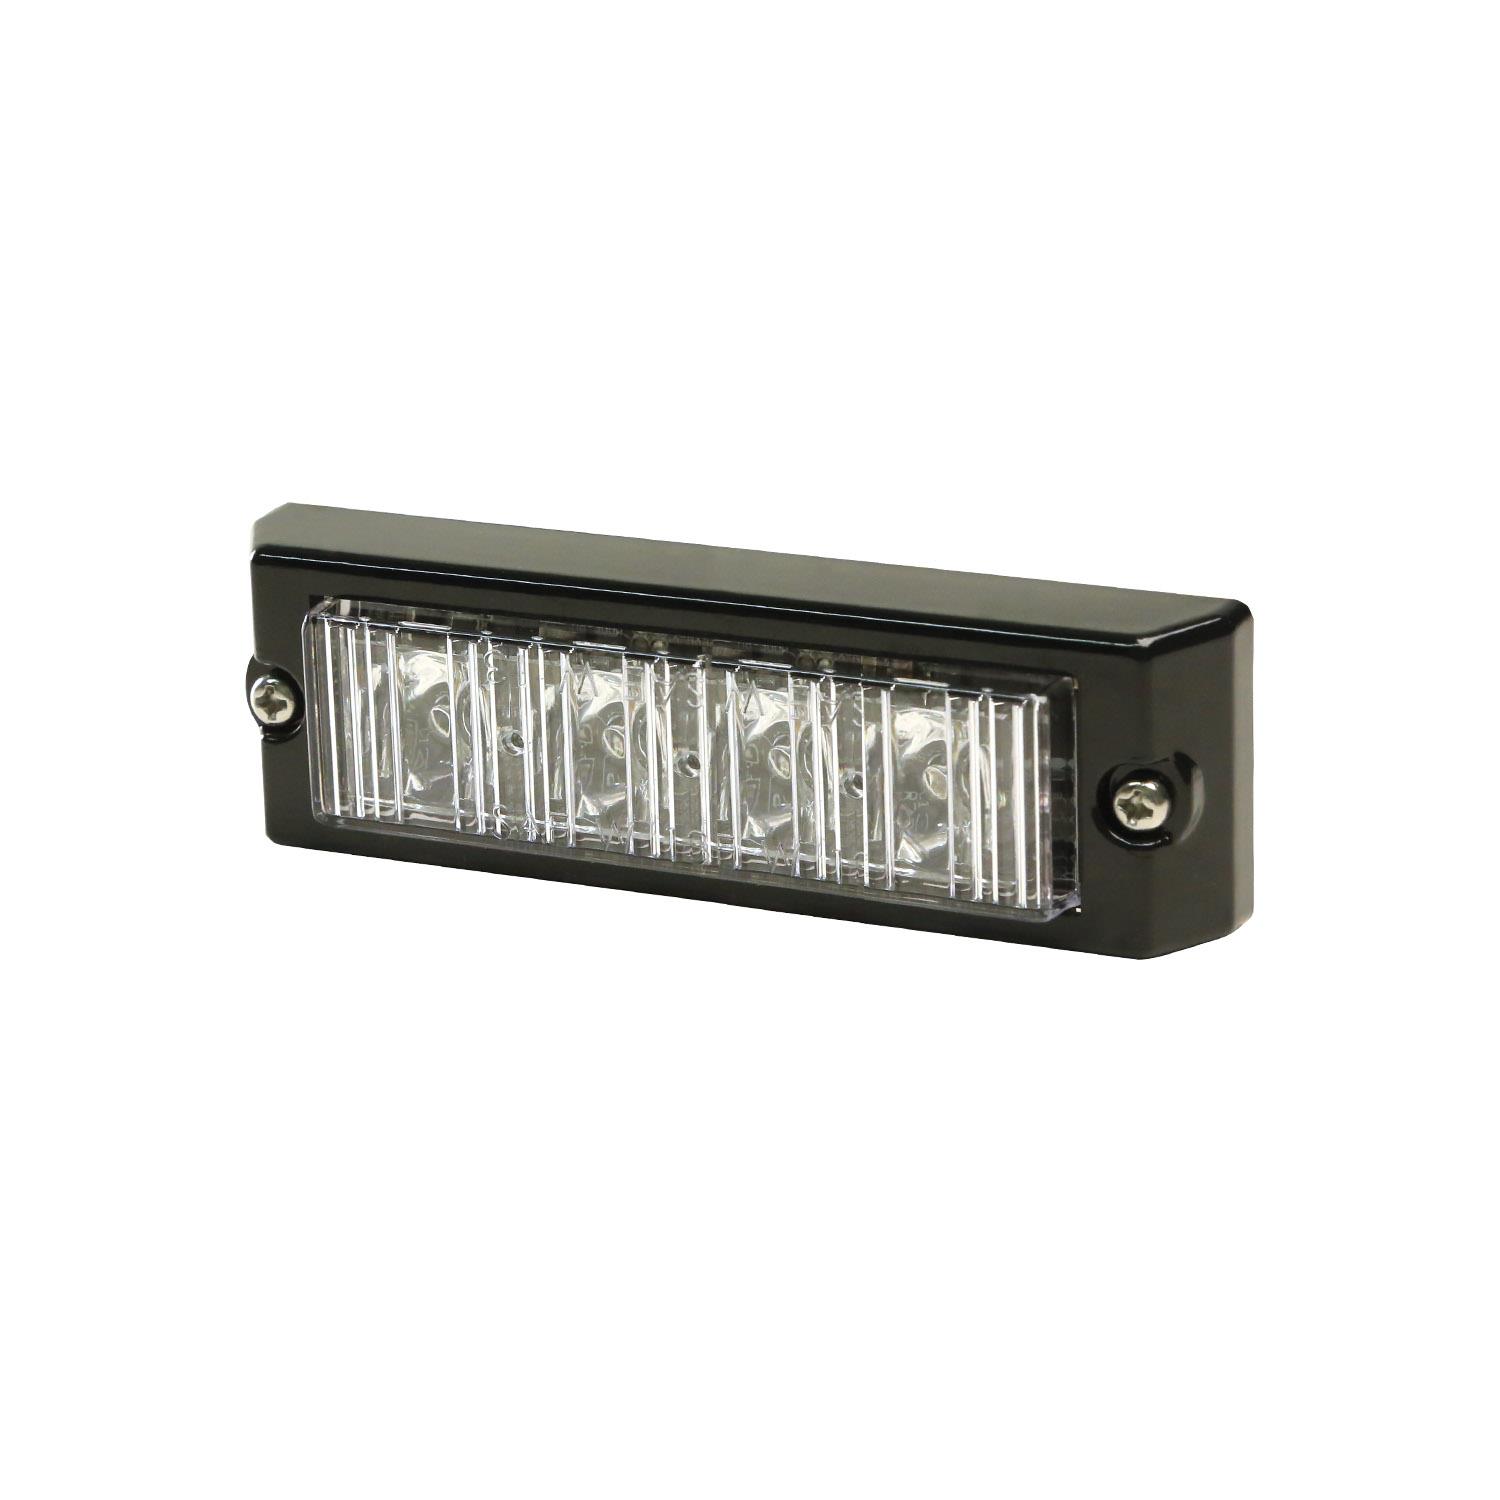 Directional 4 LED Warning Light, 21 Flash Patterns, Surface Mount